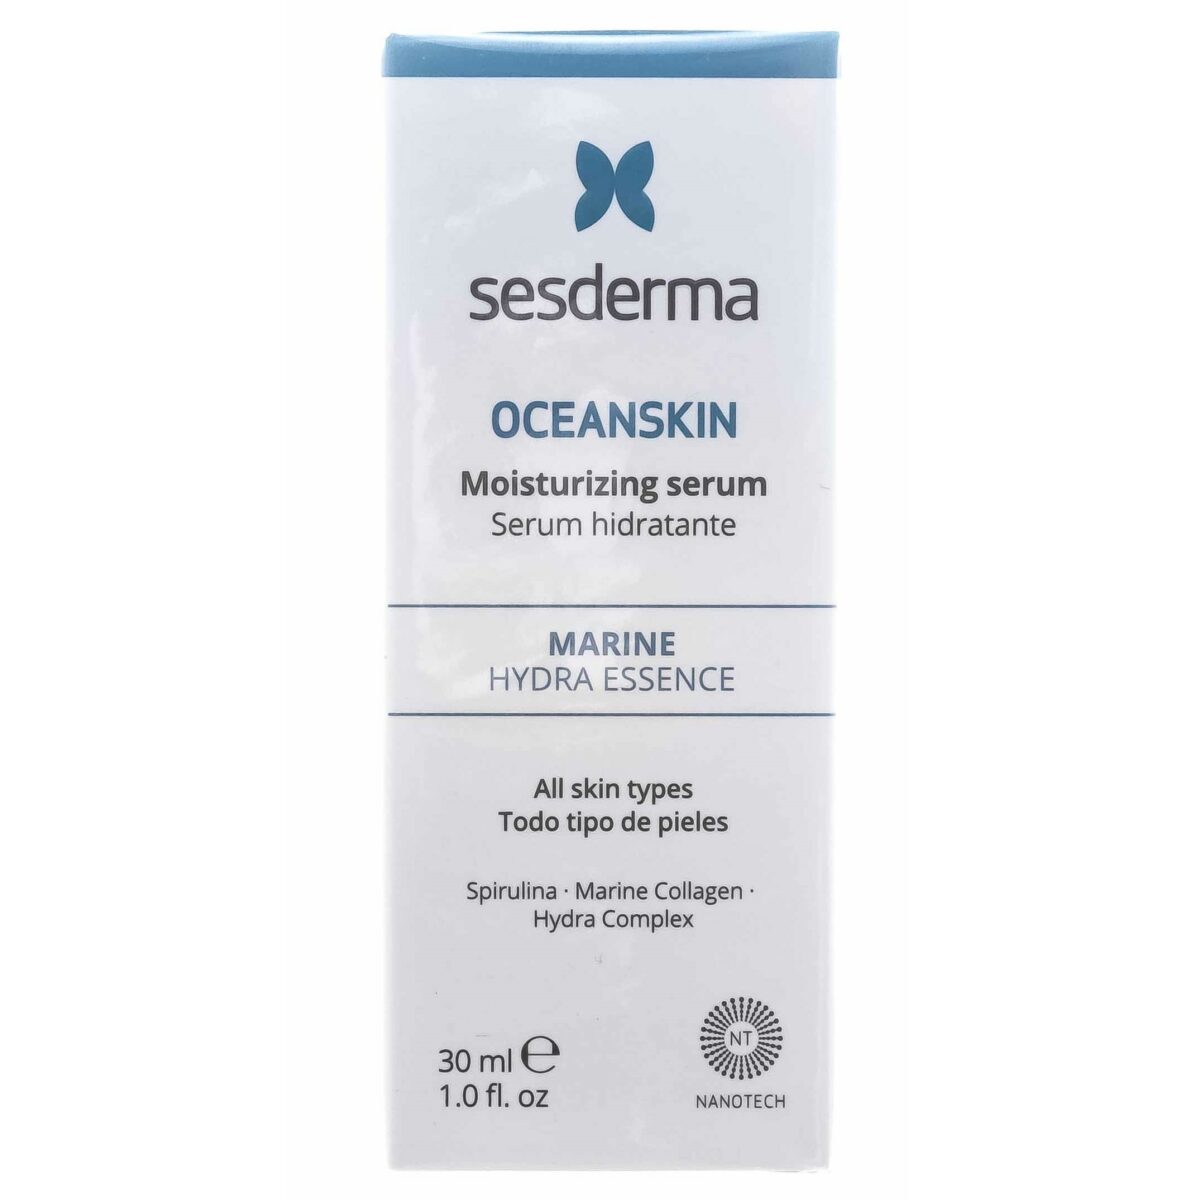 Oceanskin Moisturizing Serum Сыворотка увлажняющая 30 мл SESDERMA 40005874